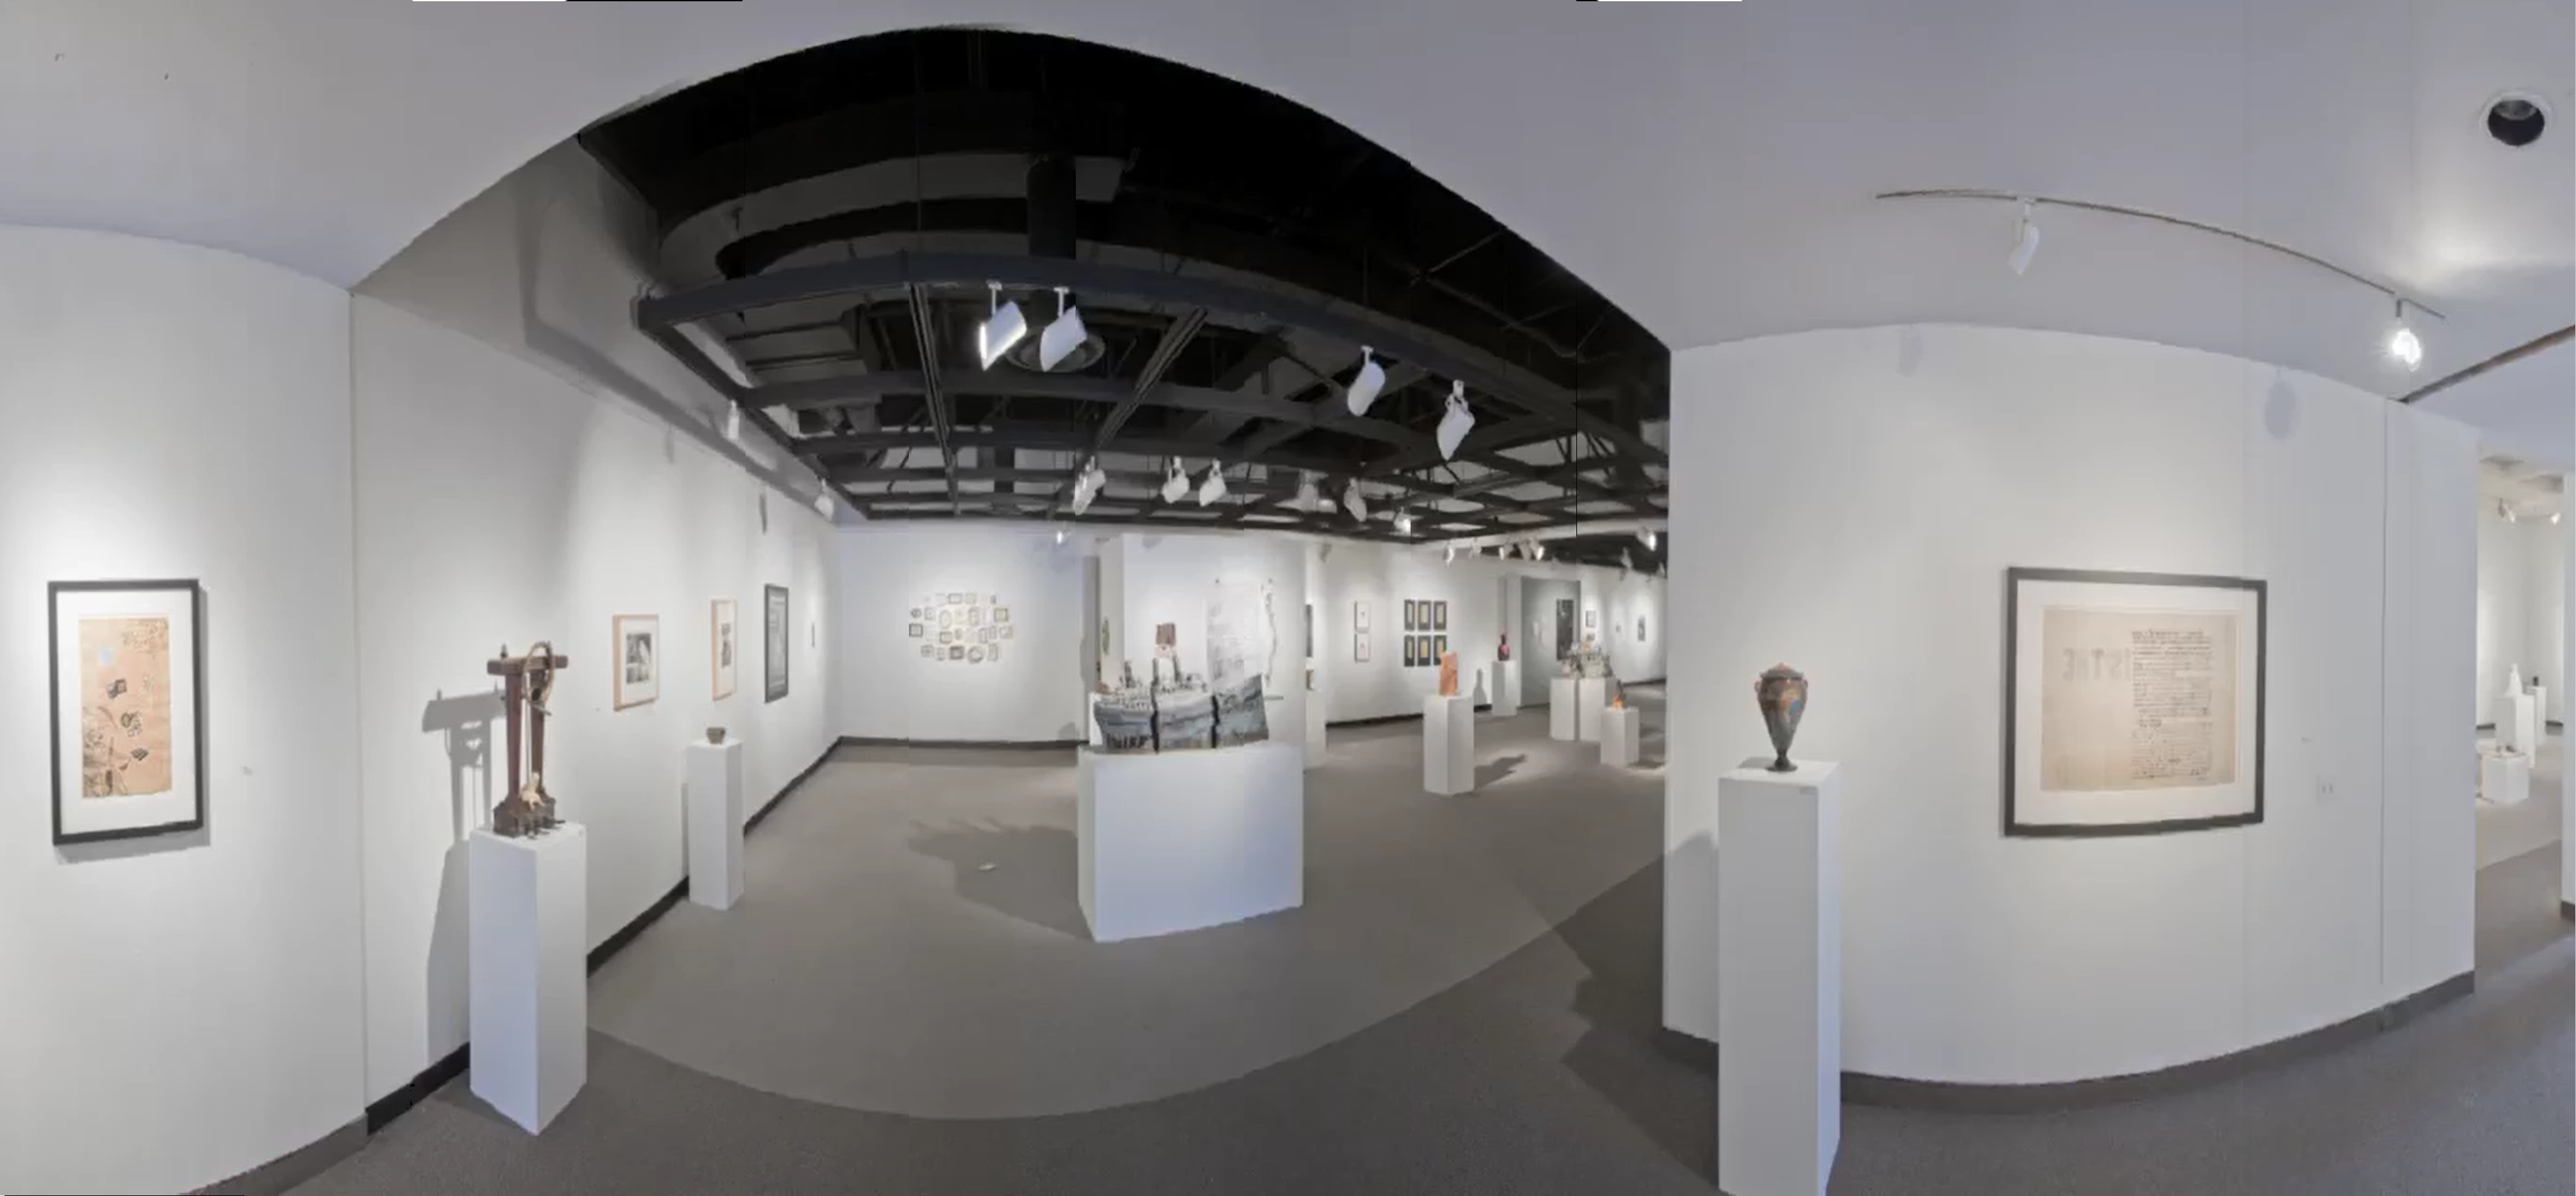 Installation View, Corridor of Gallery, Ink & Clay 37  Exhibition, Mar. 17, 2011 to Apr. 19, 2011.